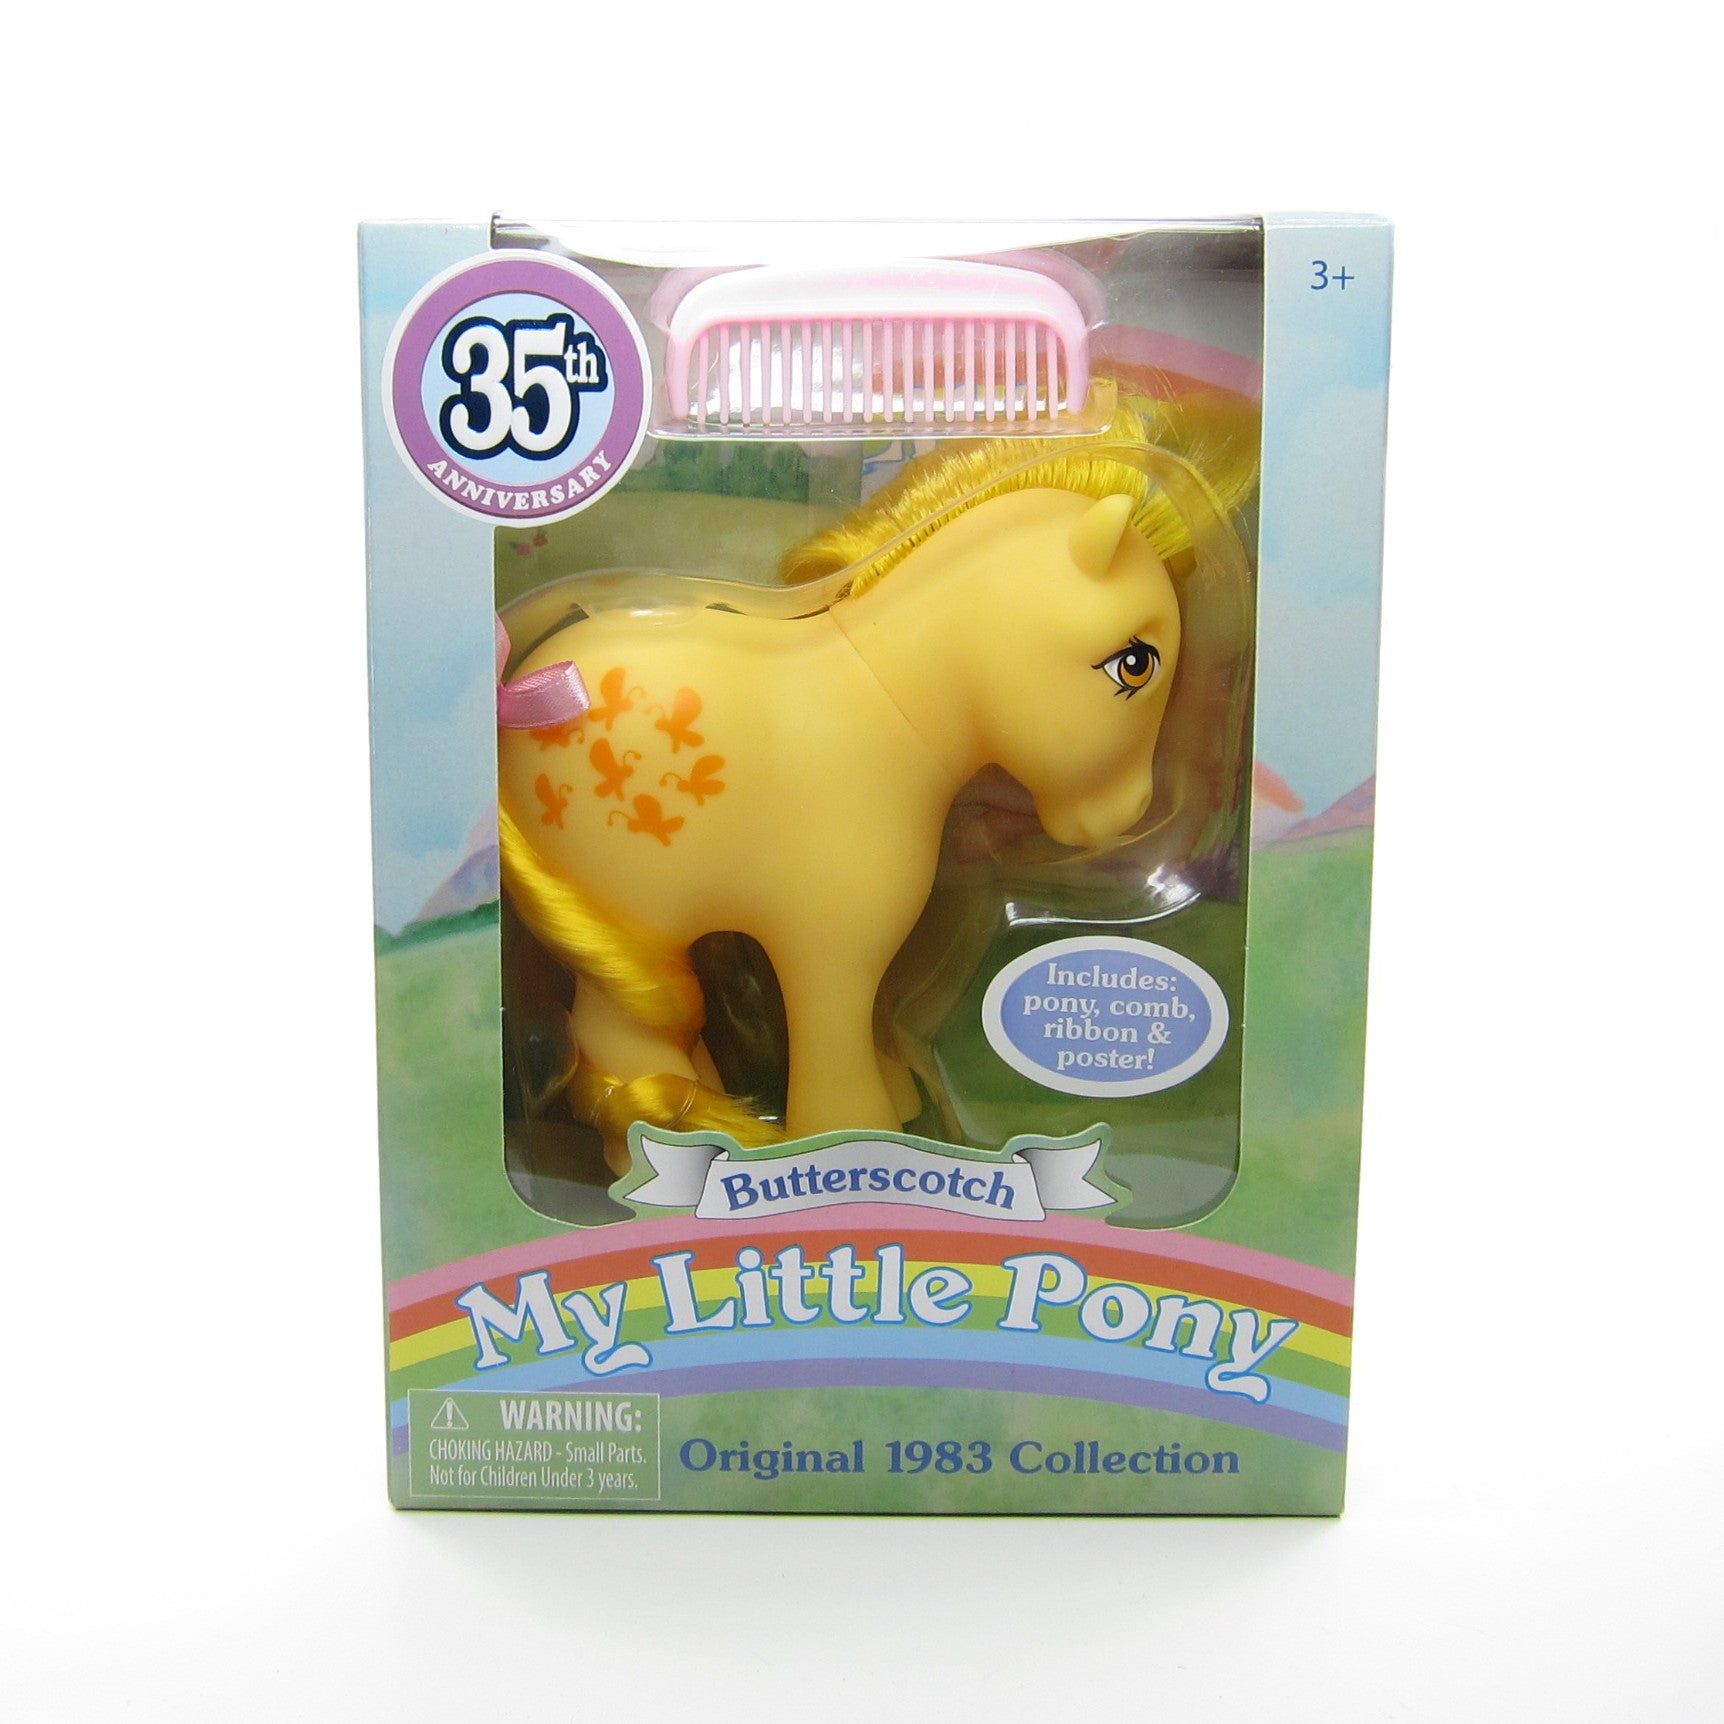 Butterscotch 35th Anniversary My Little Pony